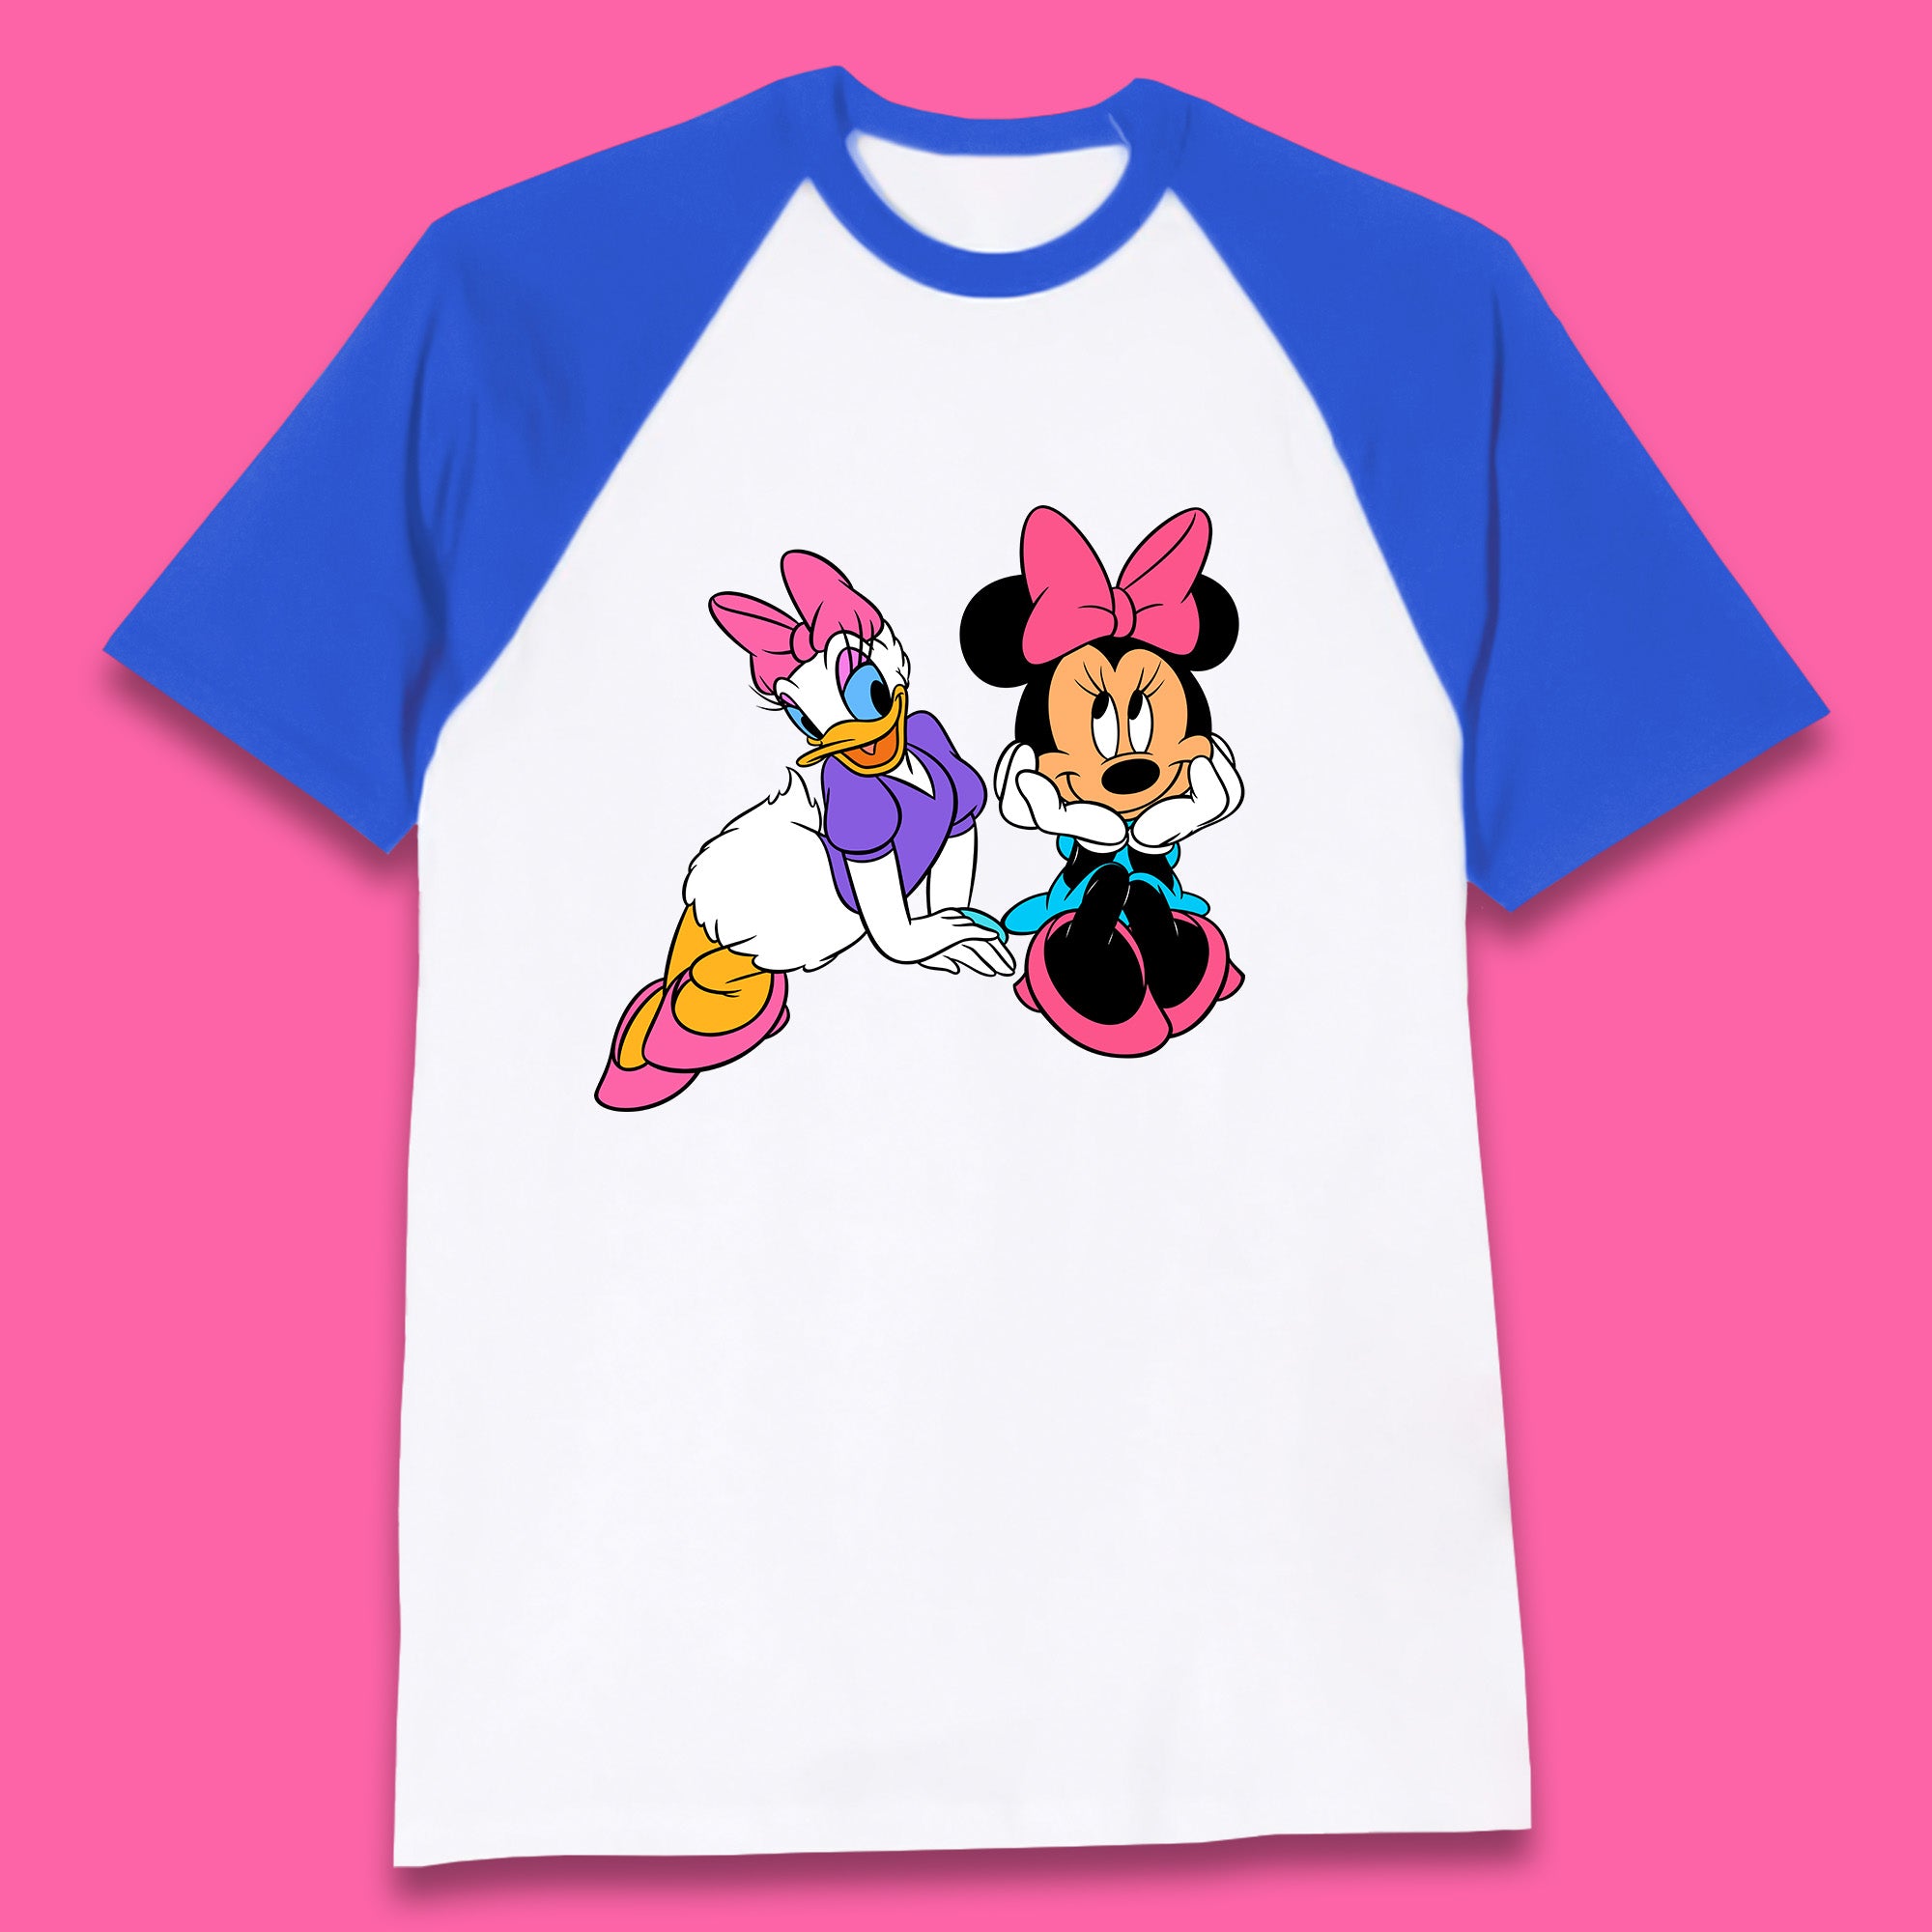 Cute Disney Minnie Mouse and Daffy Duck Best Friends Magic Kingdom Holiday Disney Best Friends Cartoon Character Disneyland Vacation Trip Baseball T Shirt